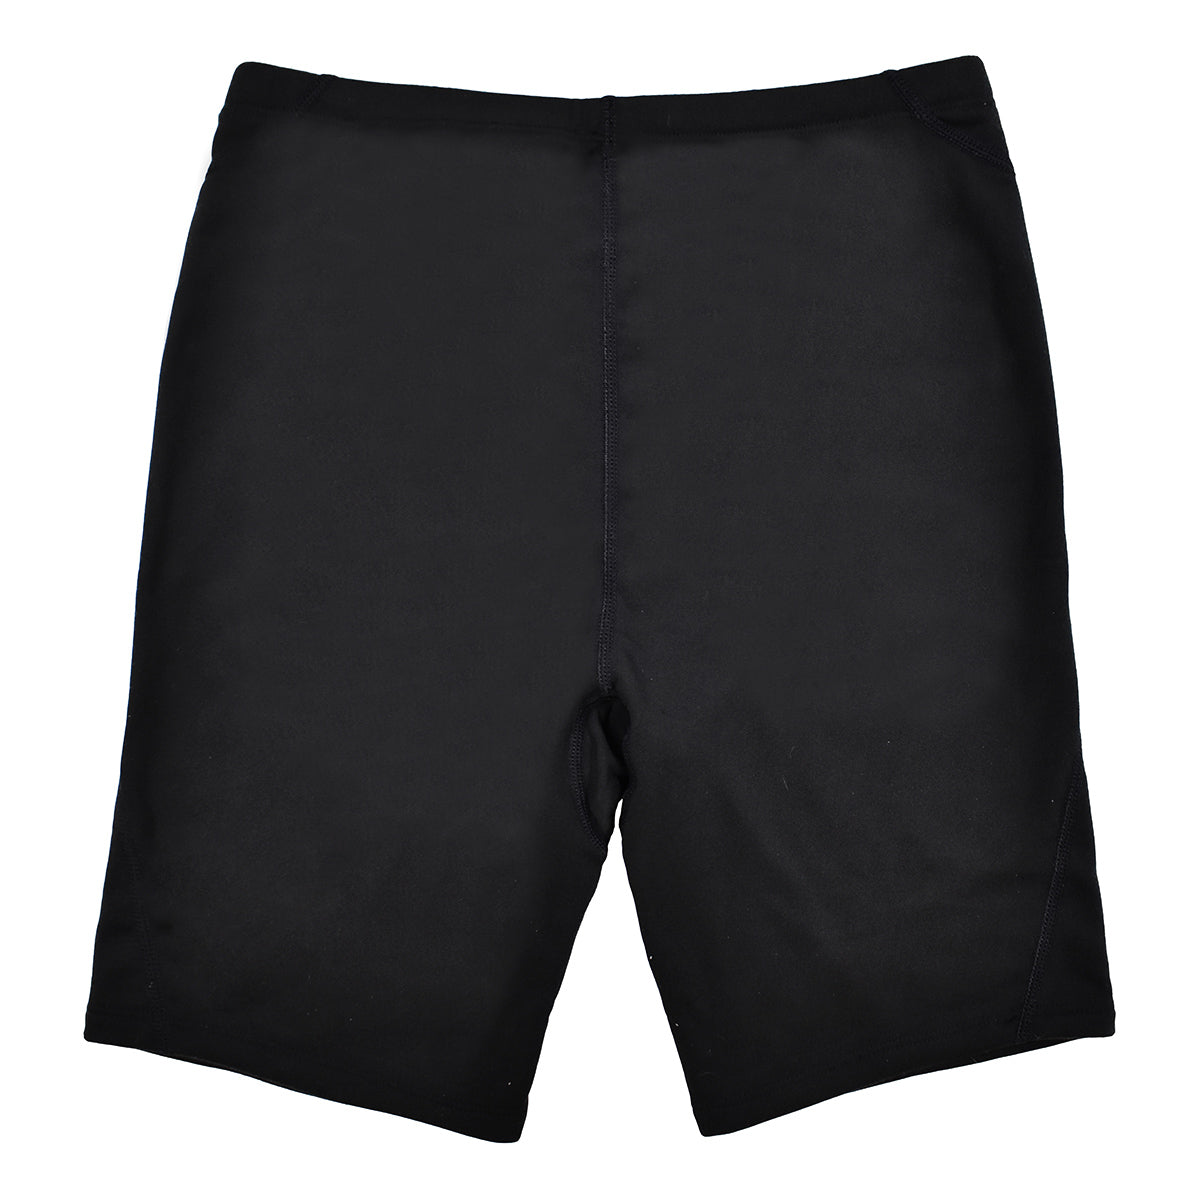 Thermaswim Adult Swim Shorts Thermal Shorts